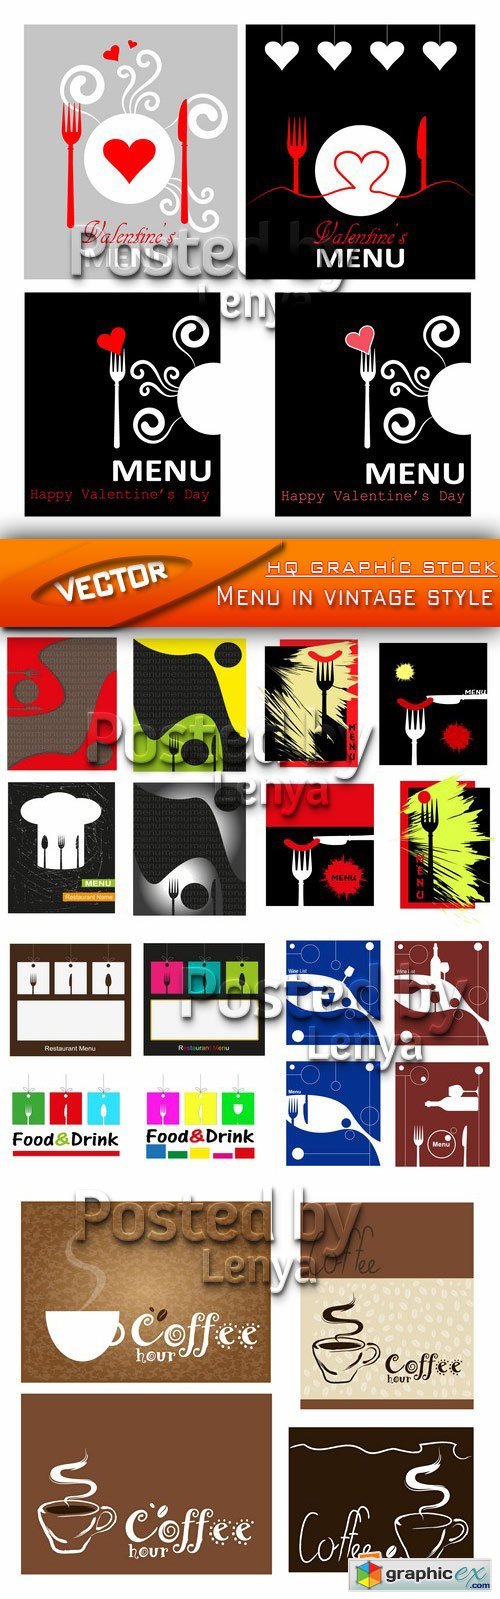 Stock Vector - Menu in vintage style